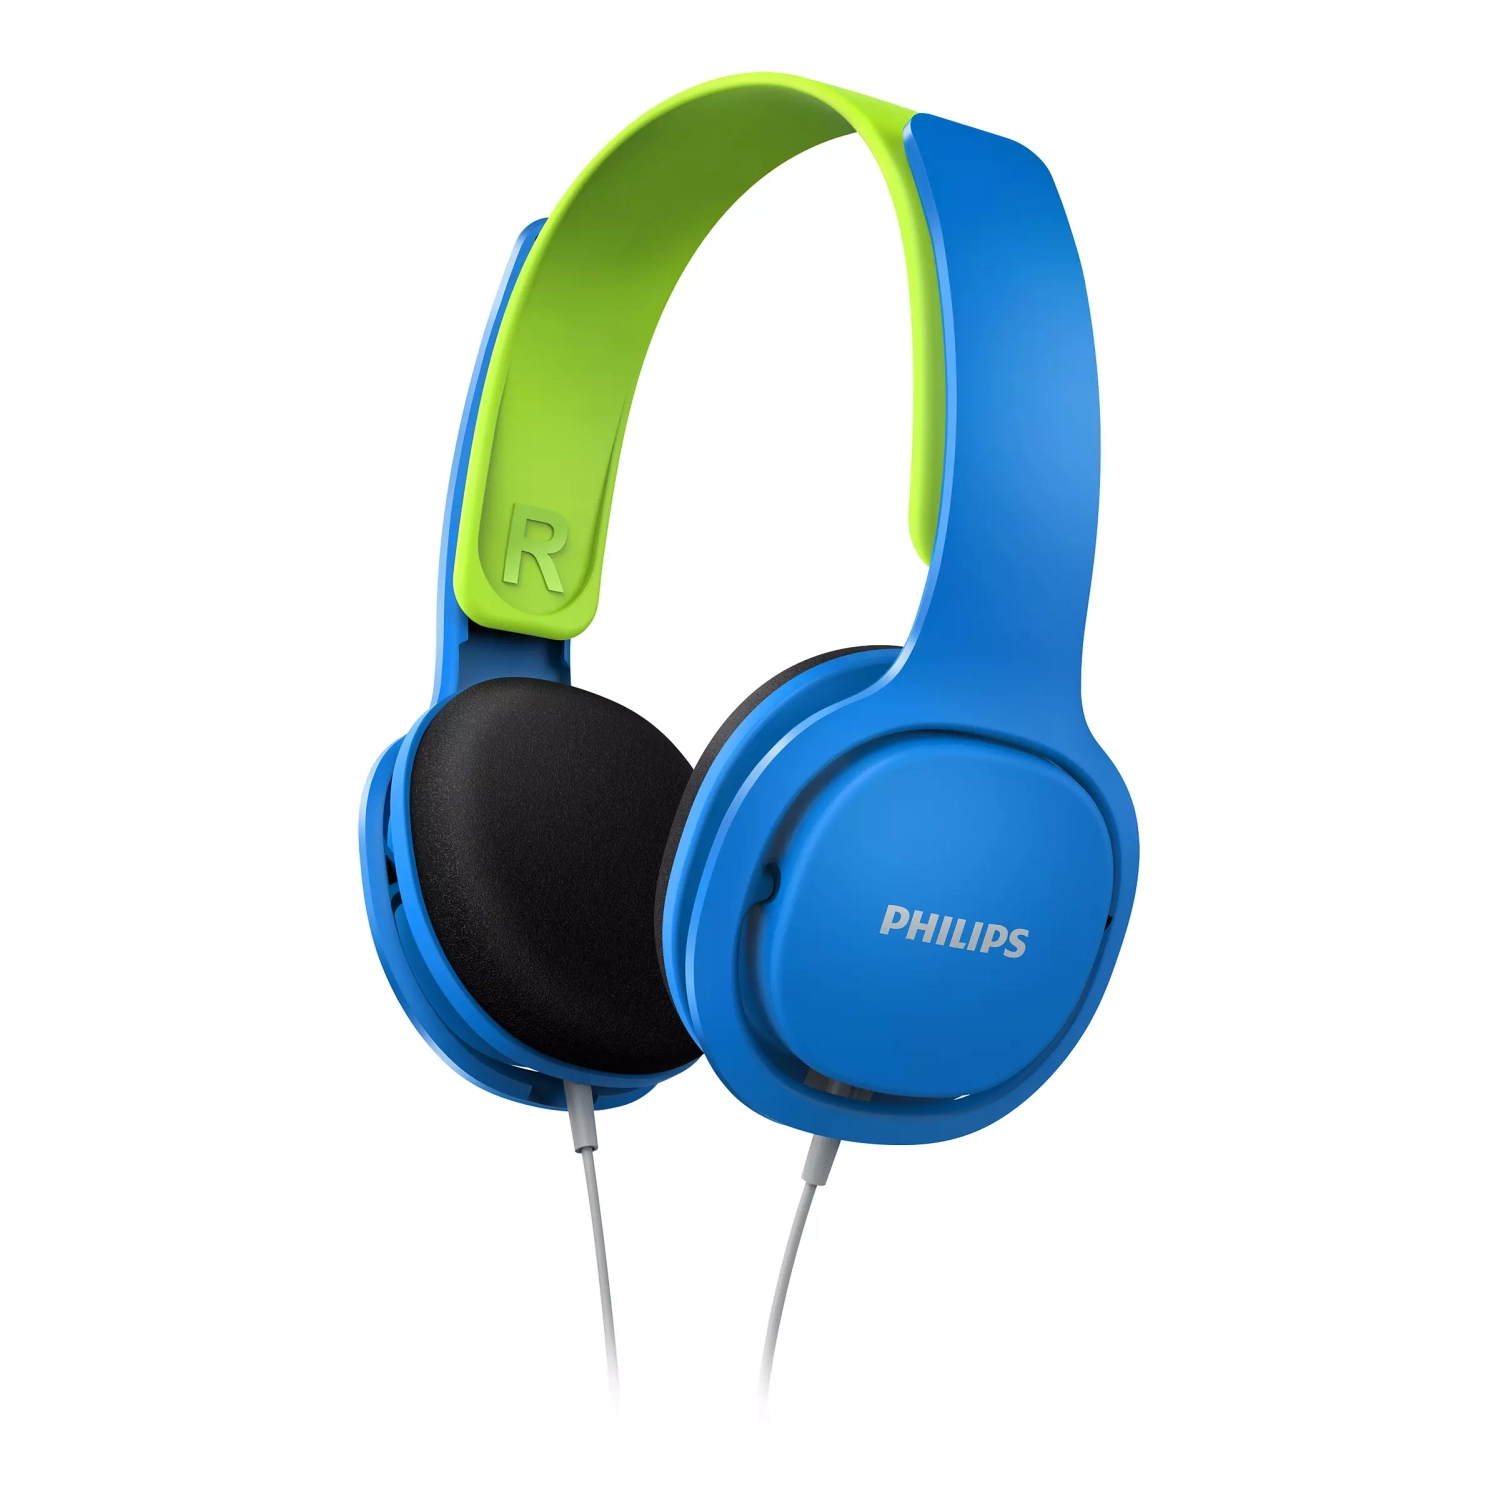 Philips Audio Coolplay Kids On-Ear Headphones - 85dB Volume Limiter - Blue/Green (SHK2000BL/00)